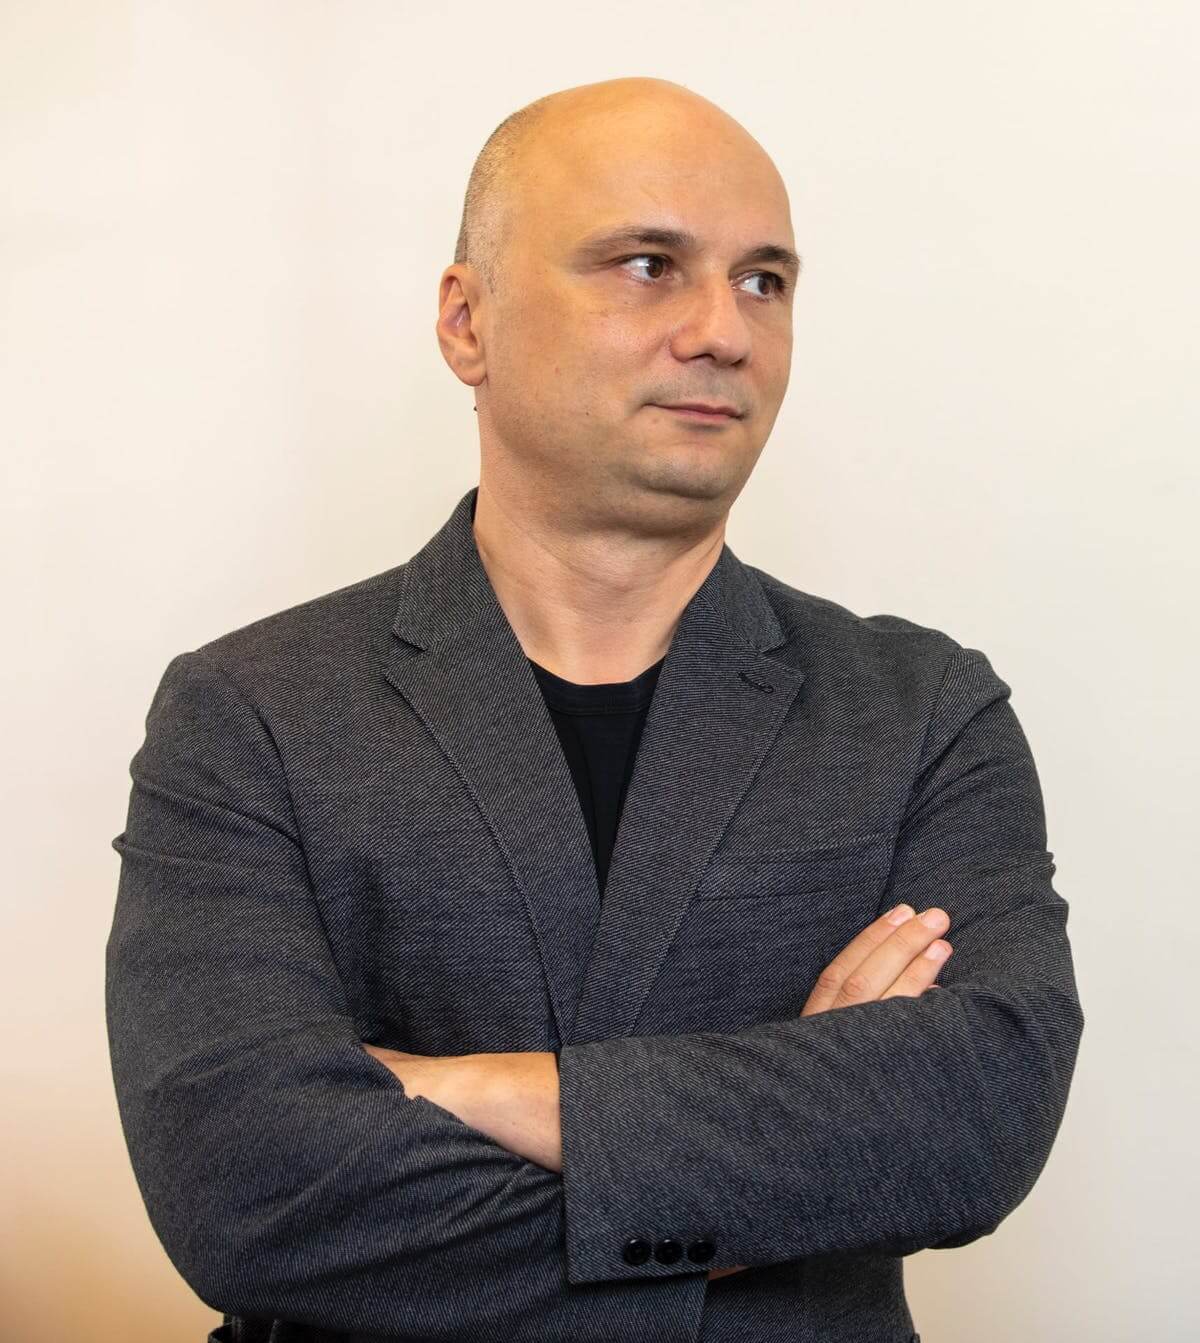 a headshot of the architect and educator Igor Marjanović